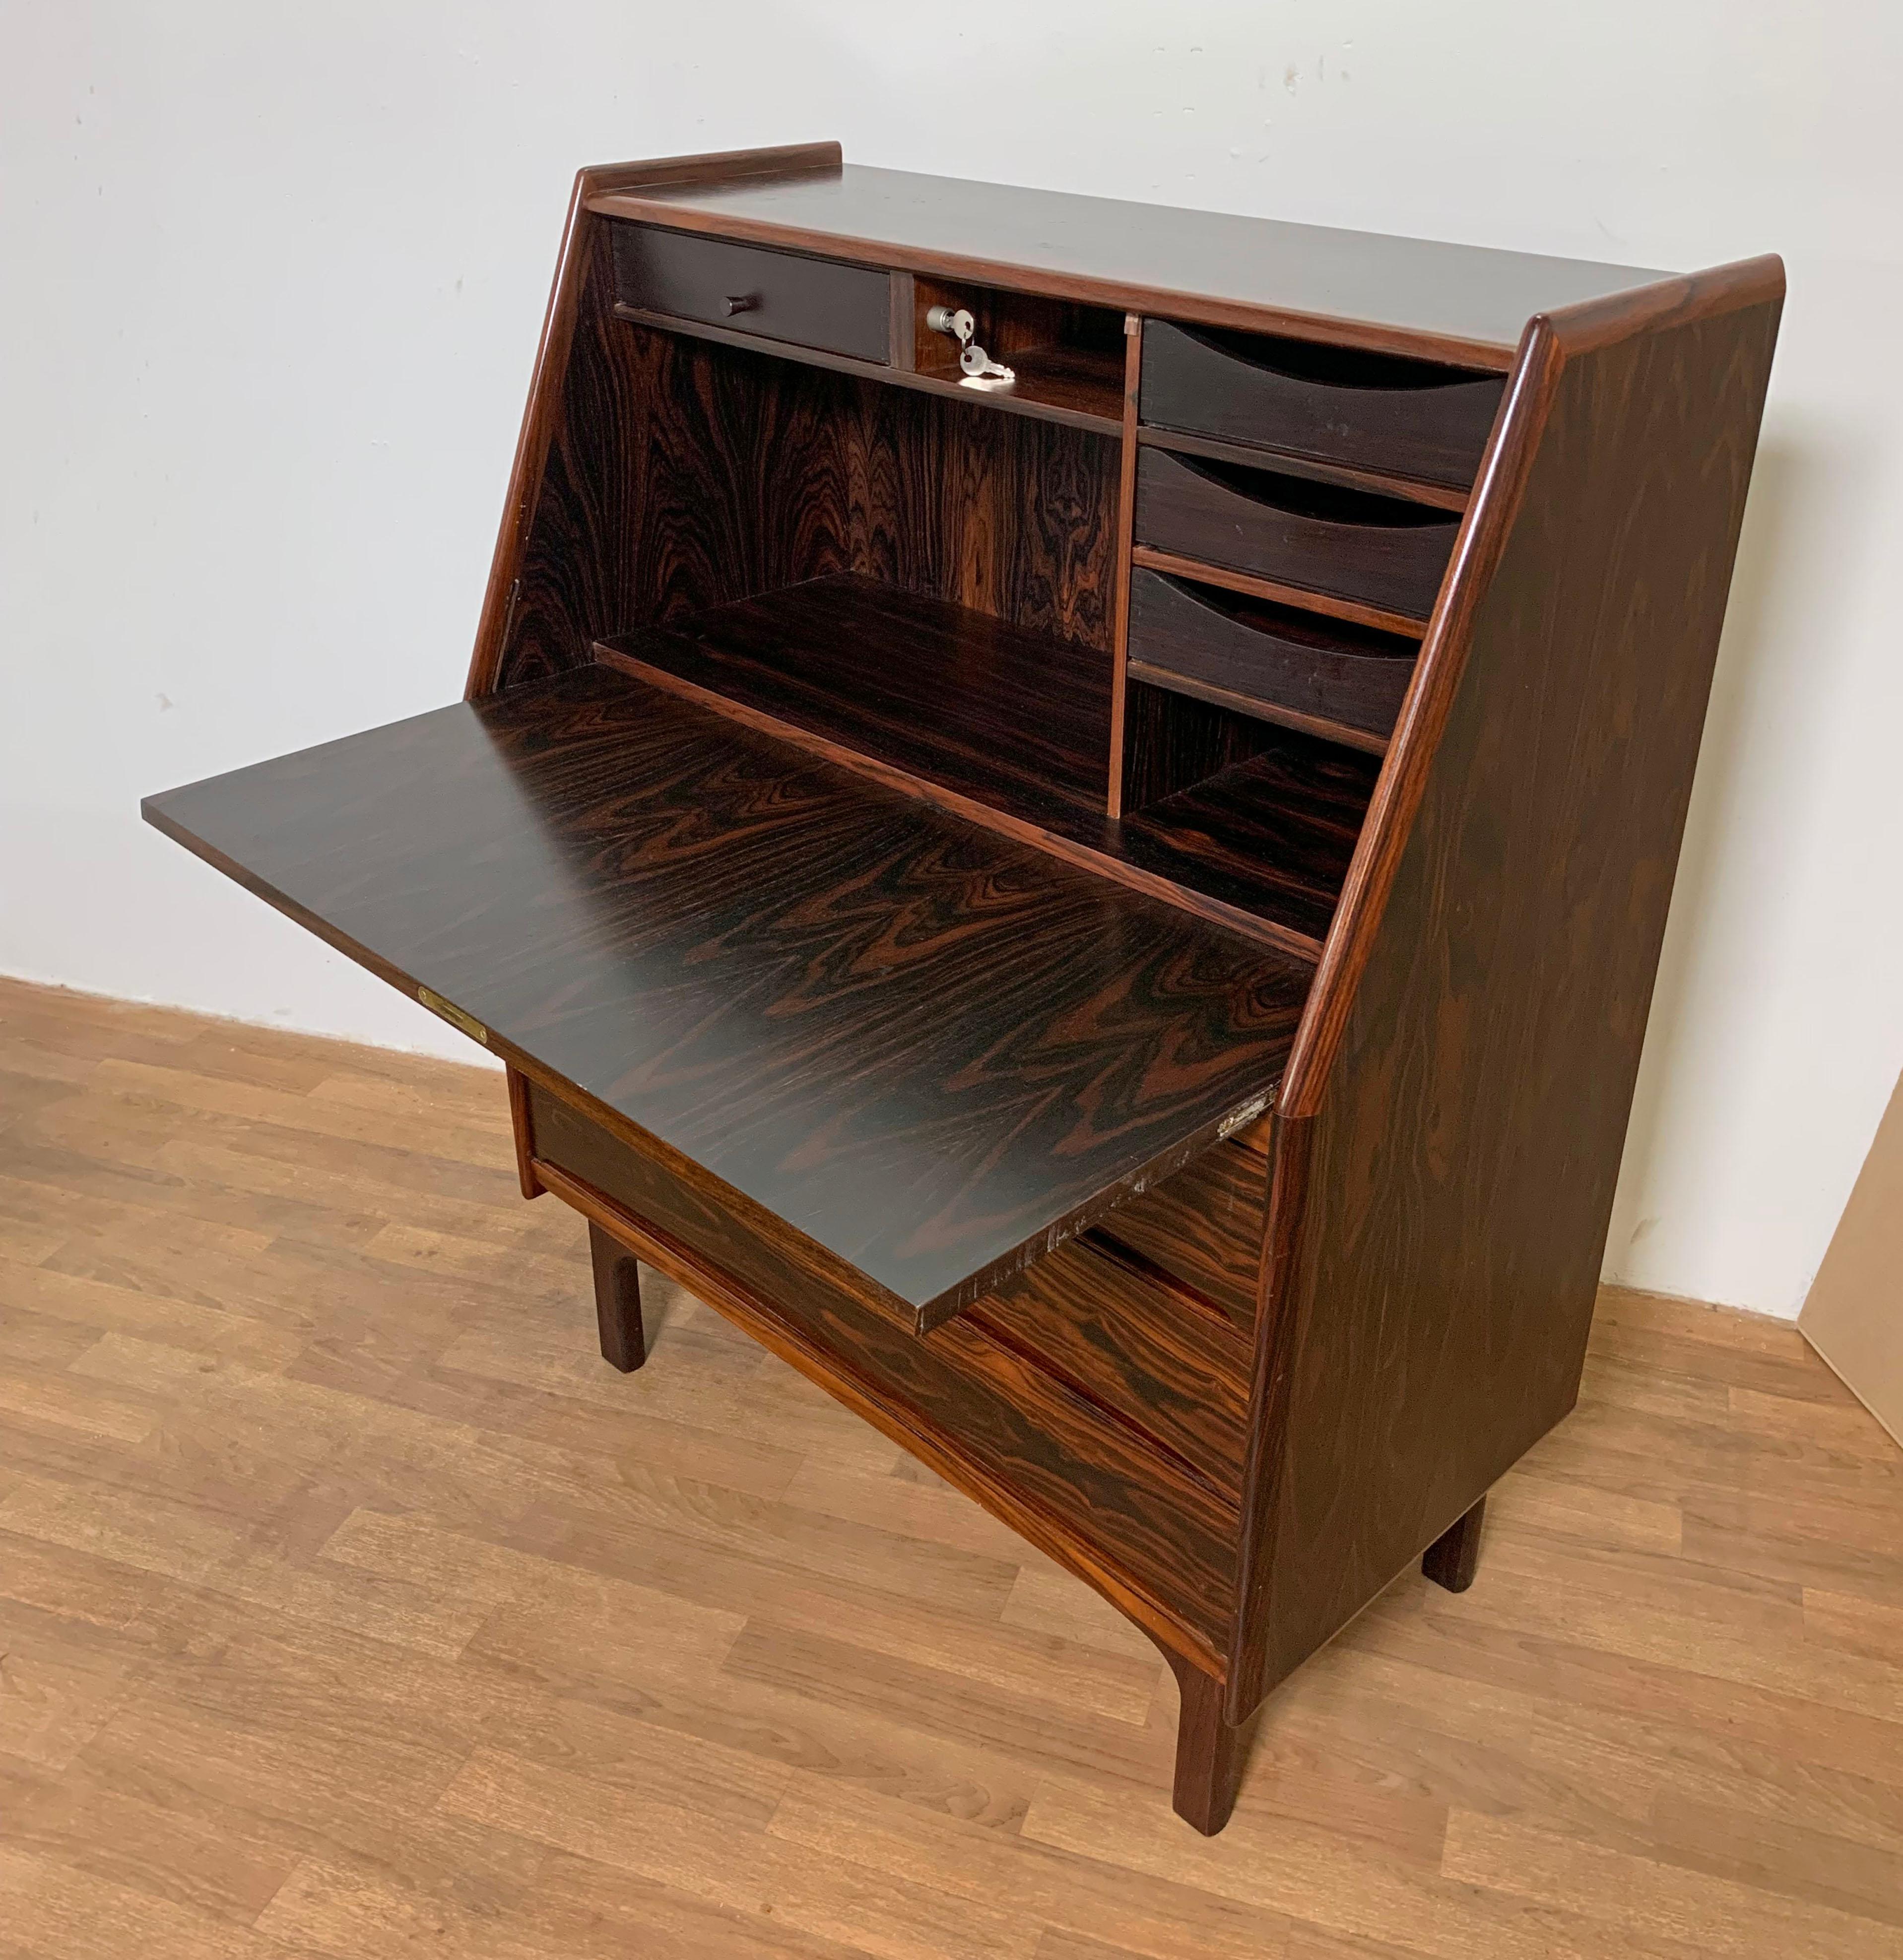 Rosewood secretary desk by Bernhard Pedersen, made in Denmark circa 1960s.

Measurements when closed: 35.5